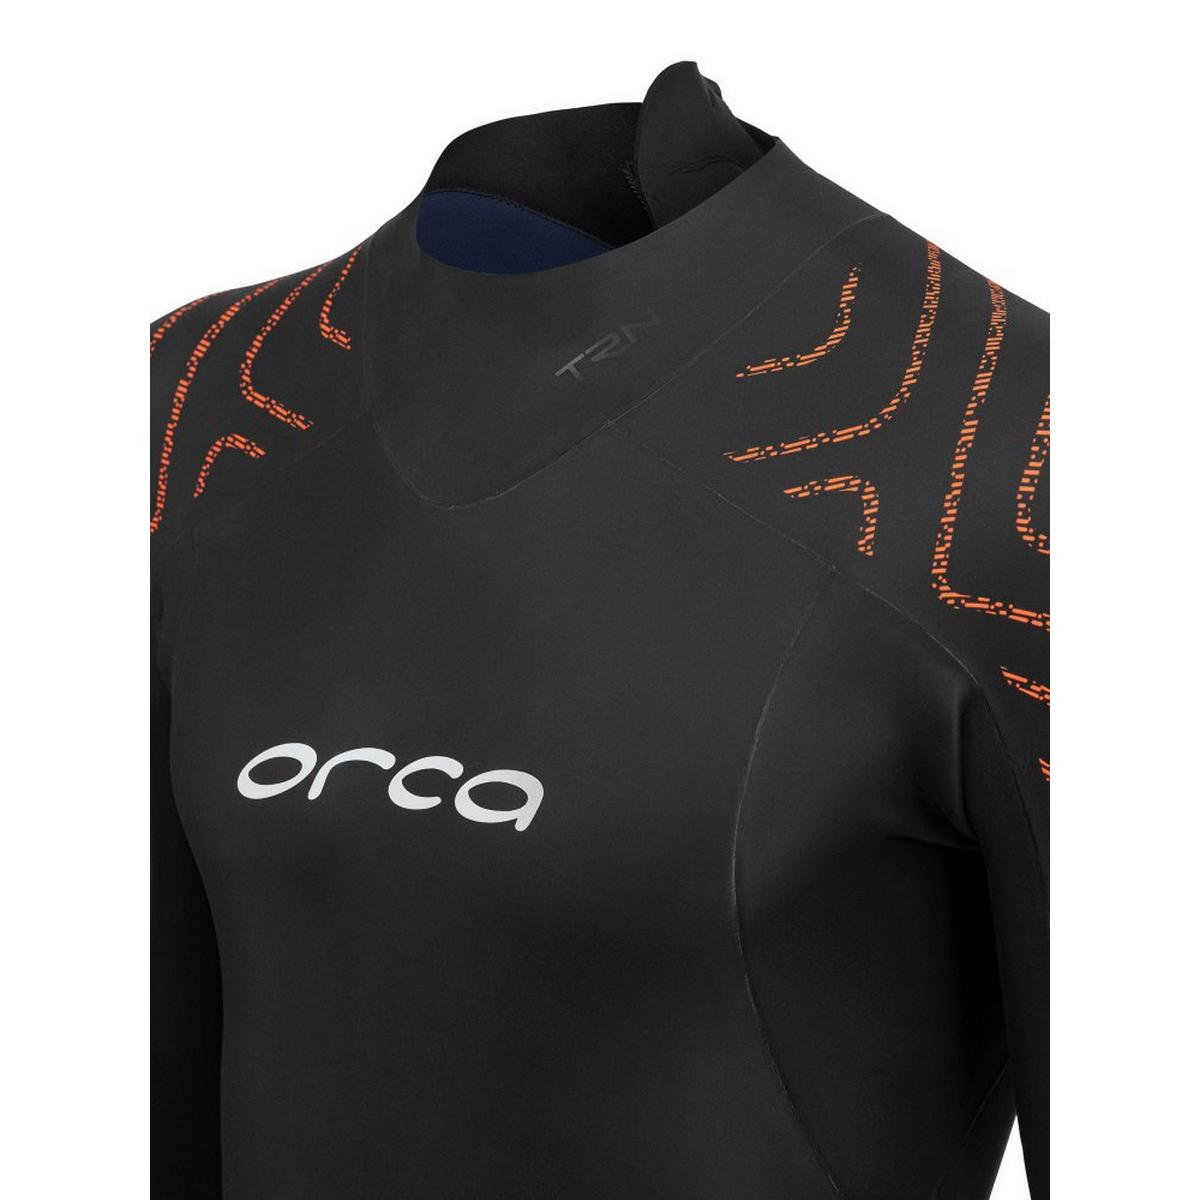 Orca Men's Vitalis Train Openwater Swim Wetsuit - Black